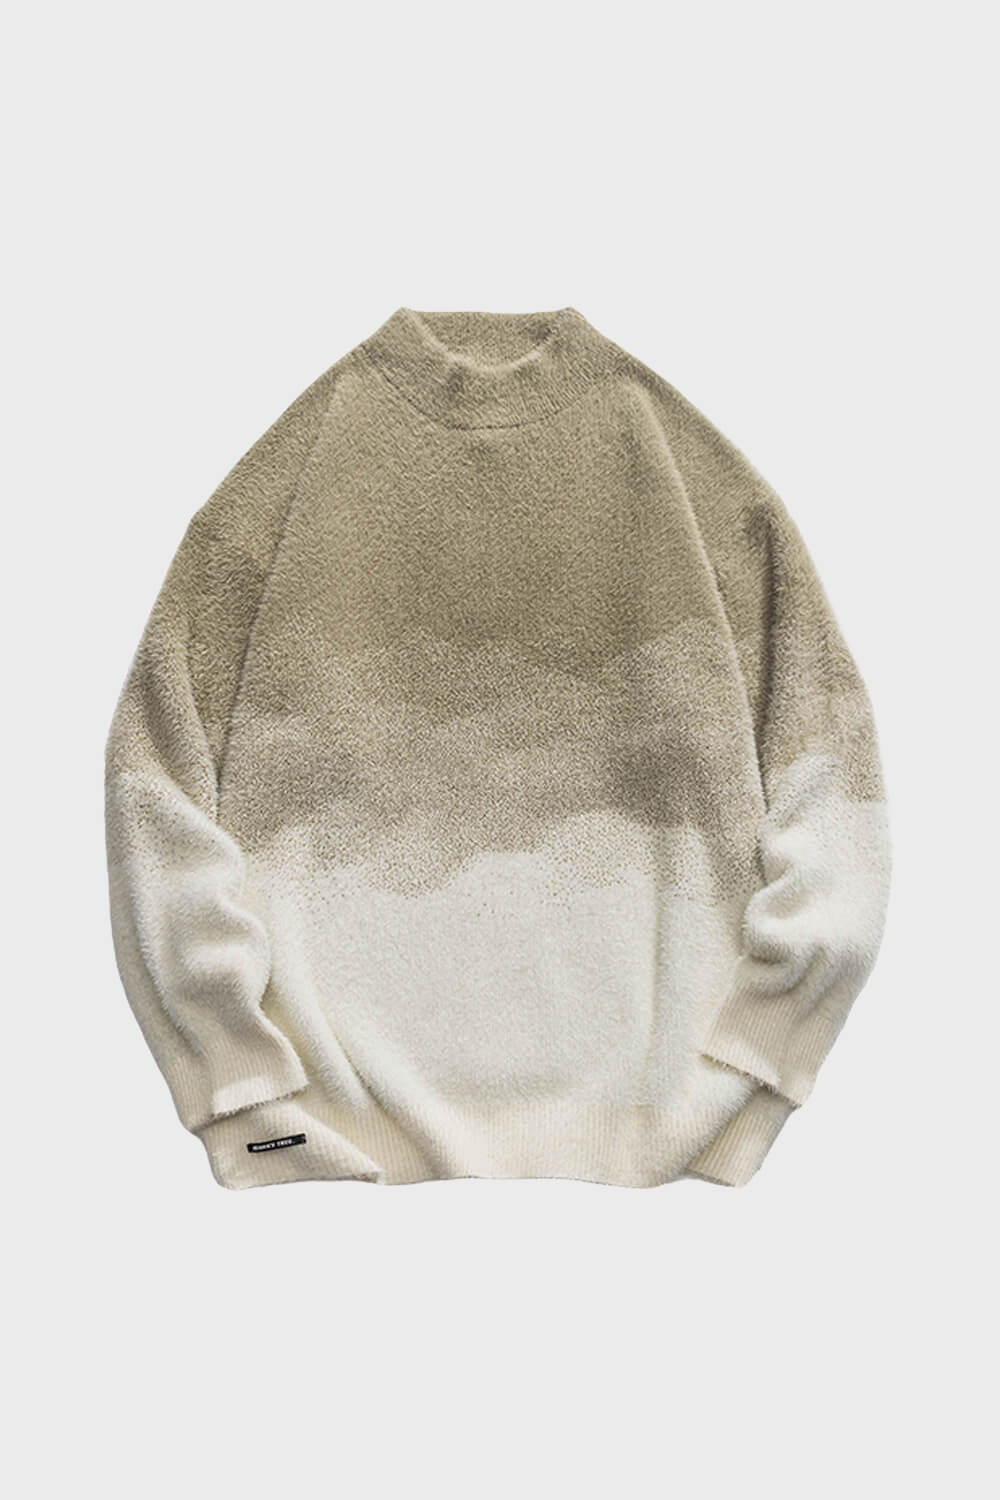 Sand Gradient Beige Aesthetic Sweater